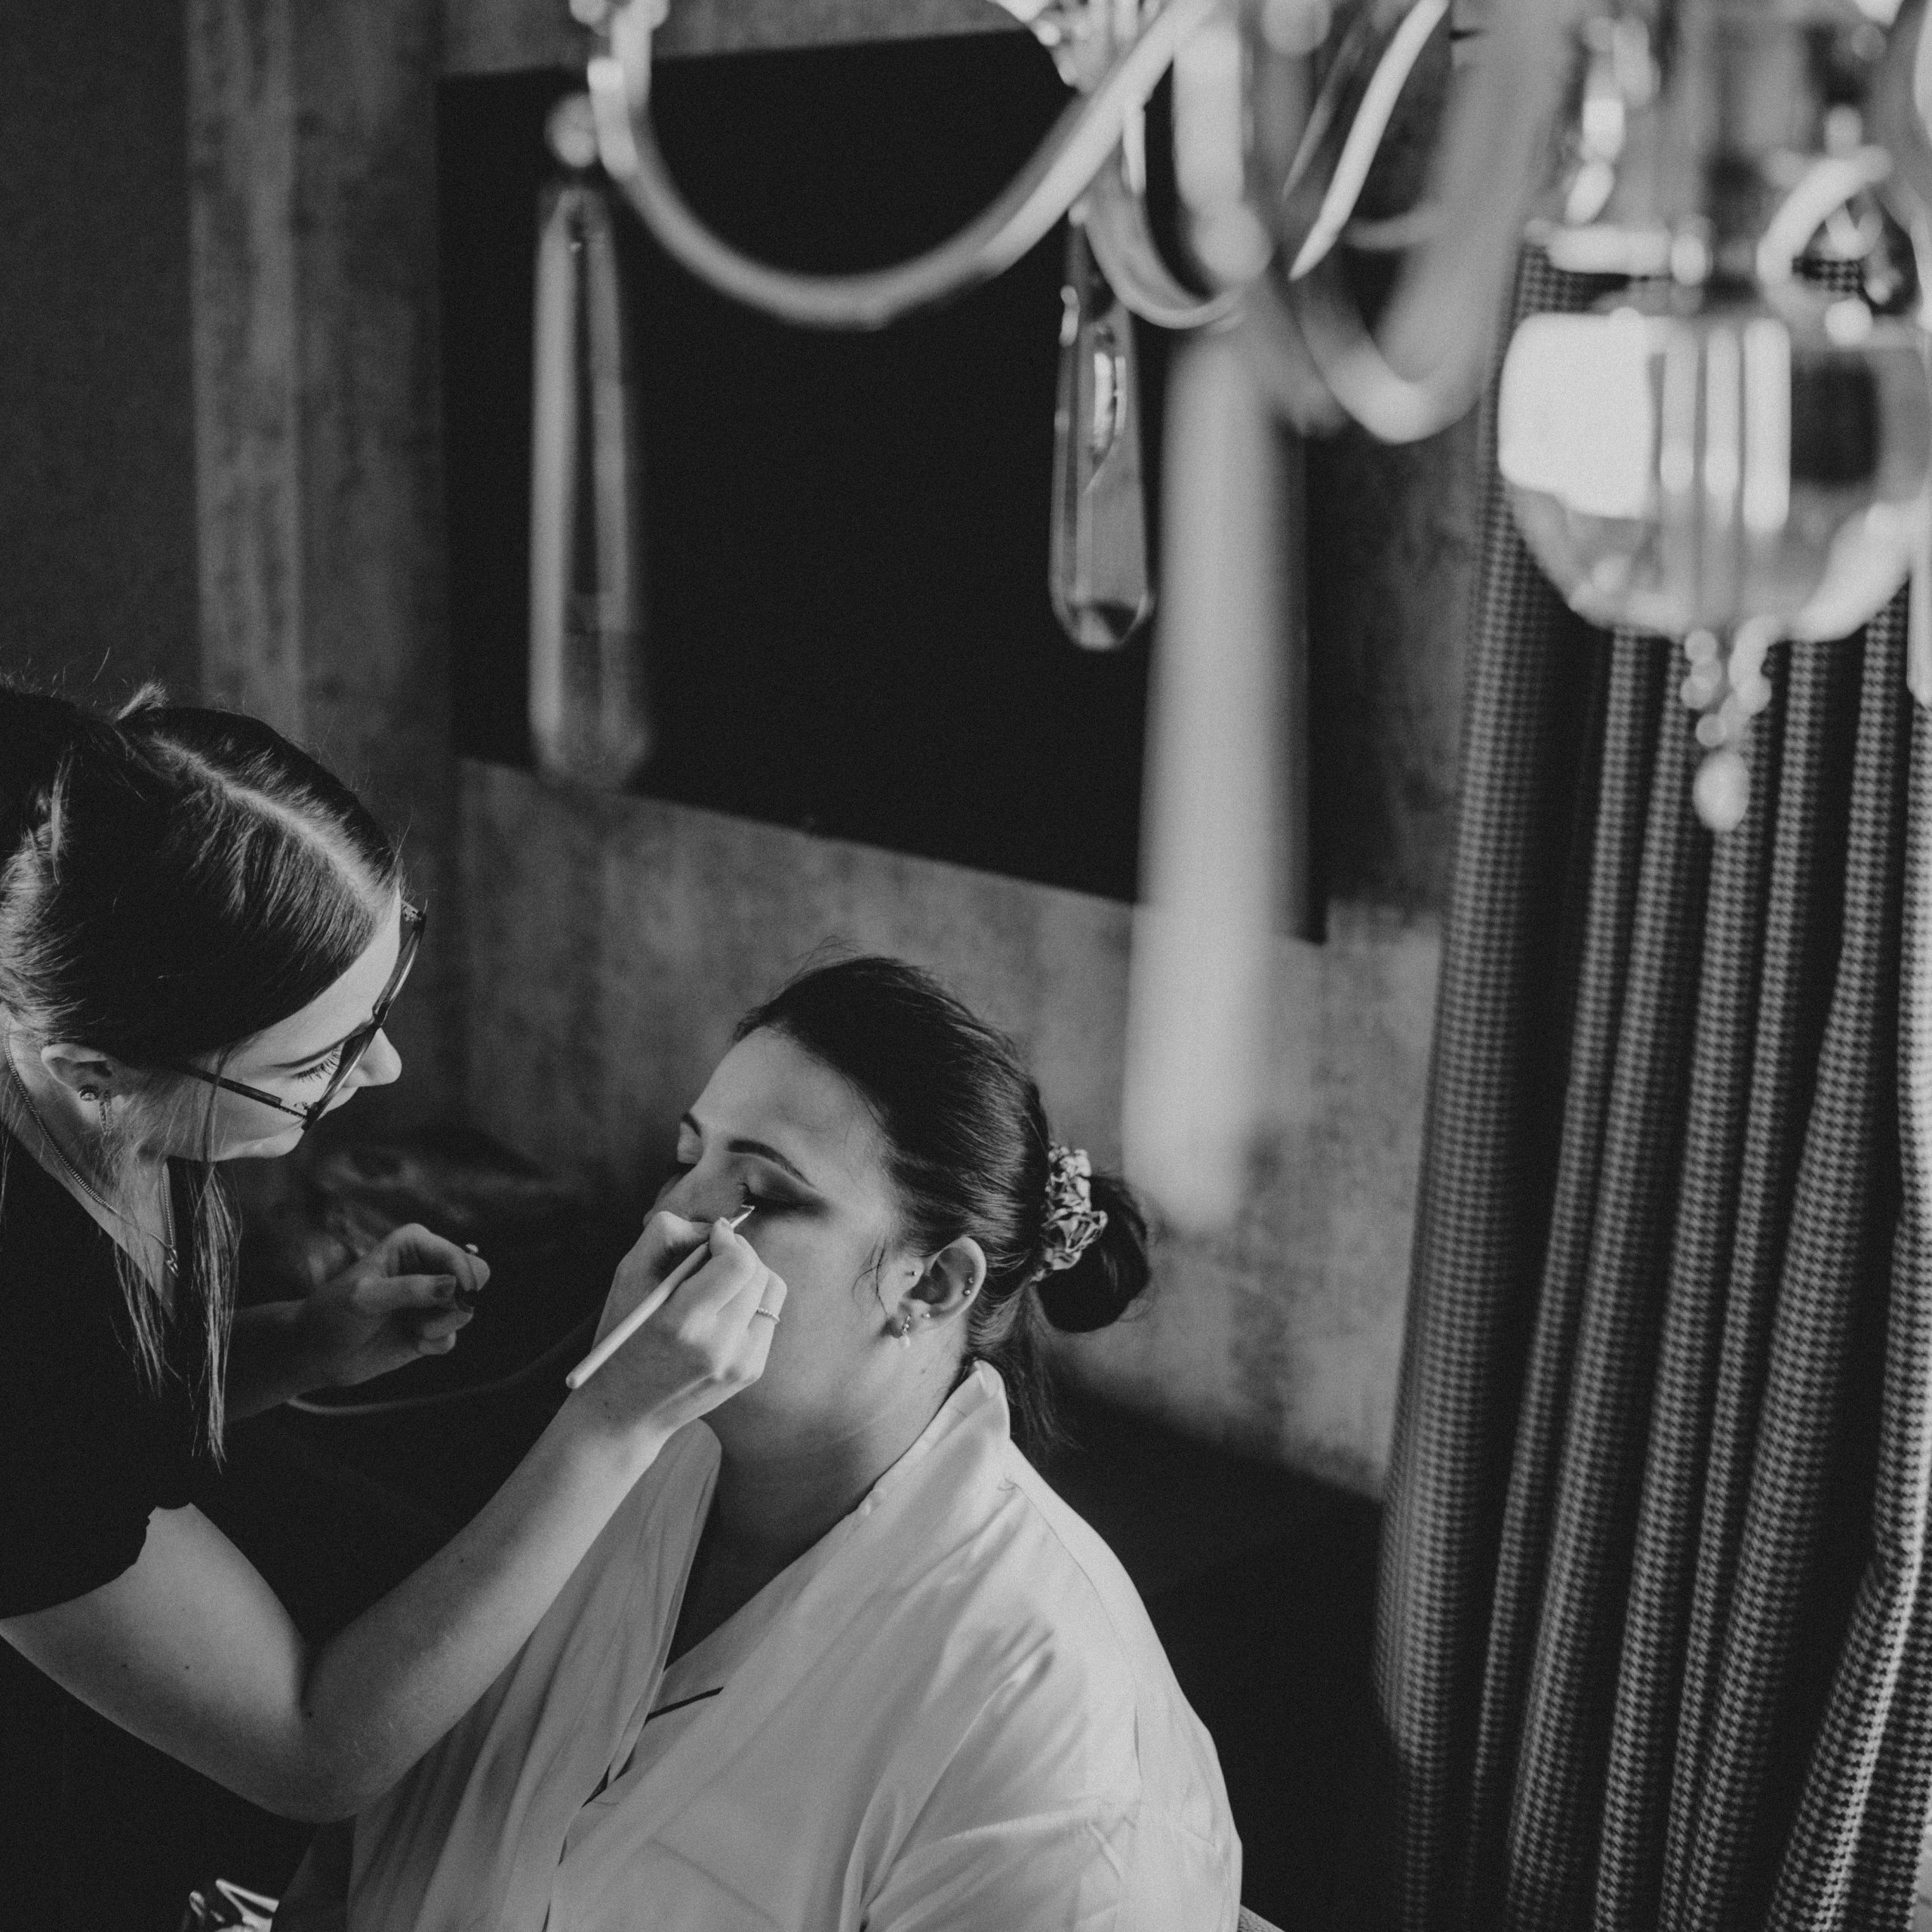 Zeta applying bridal makeup to bride